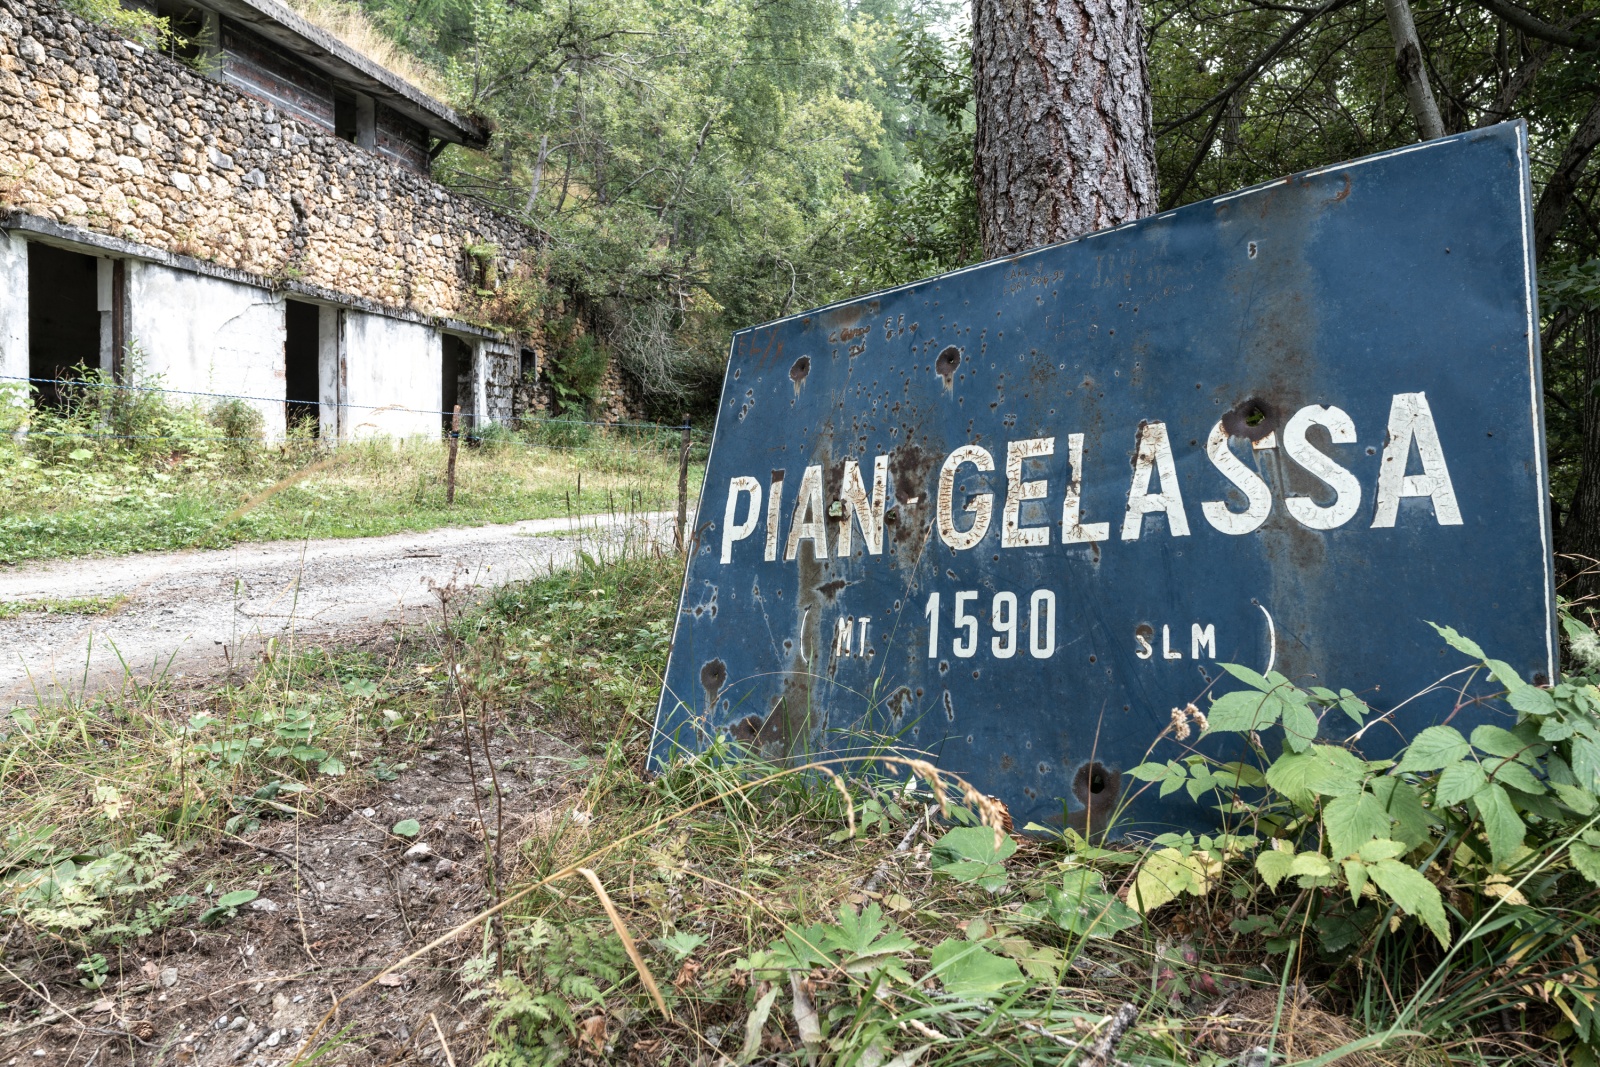 Valsusa, Italy (2019). The ghost village of Pian Gelassa